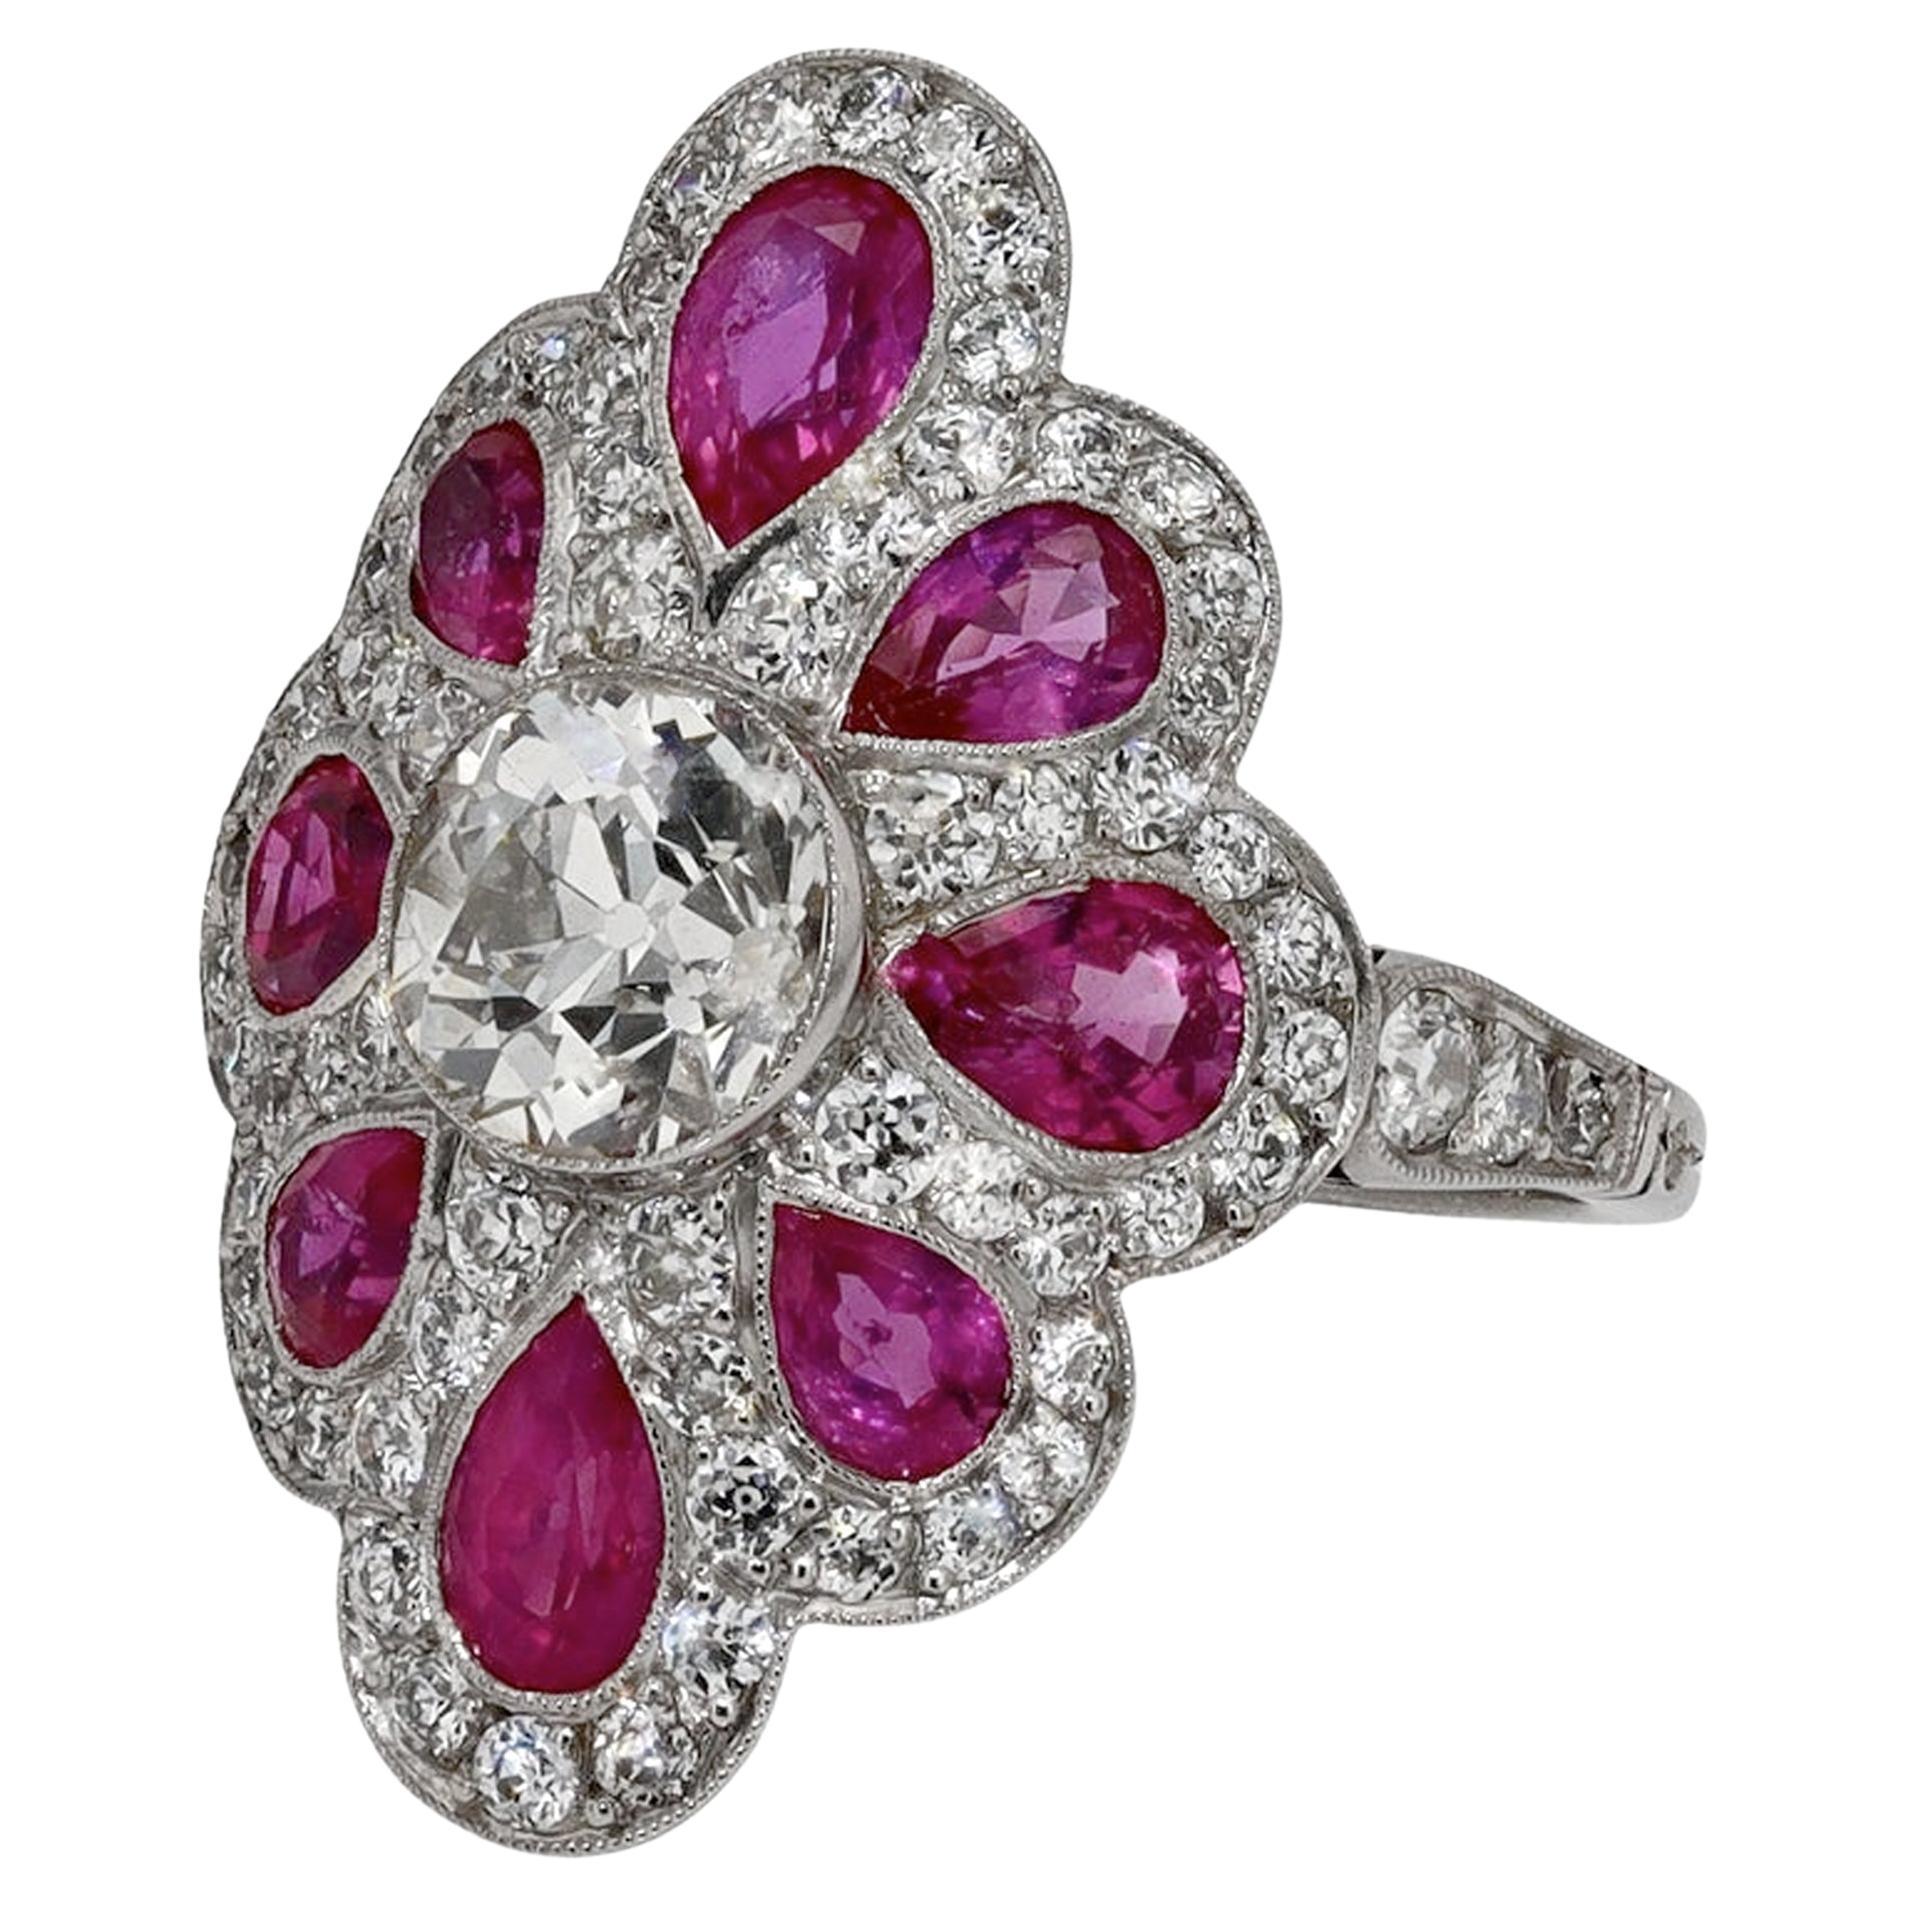 Art Deco Style 1.47 Carat Antique Diamond Pink Sapphire Cocktail Ring